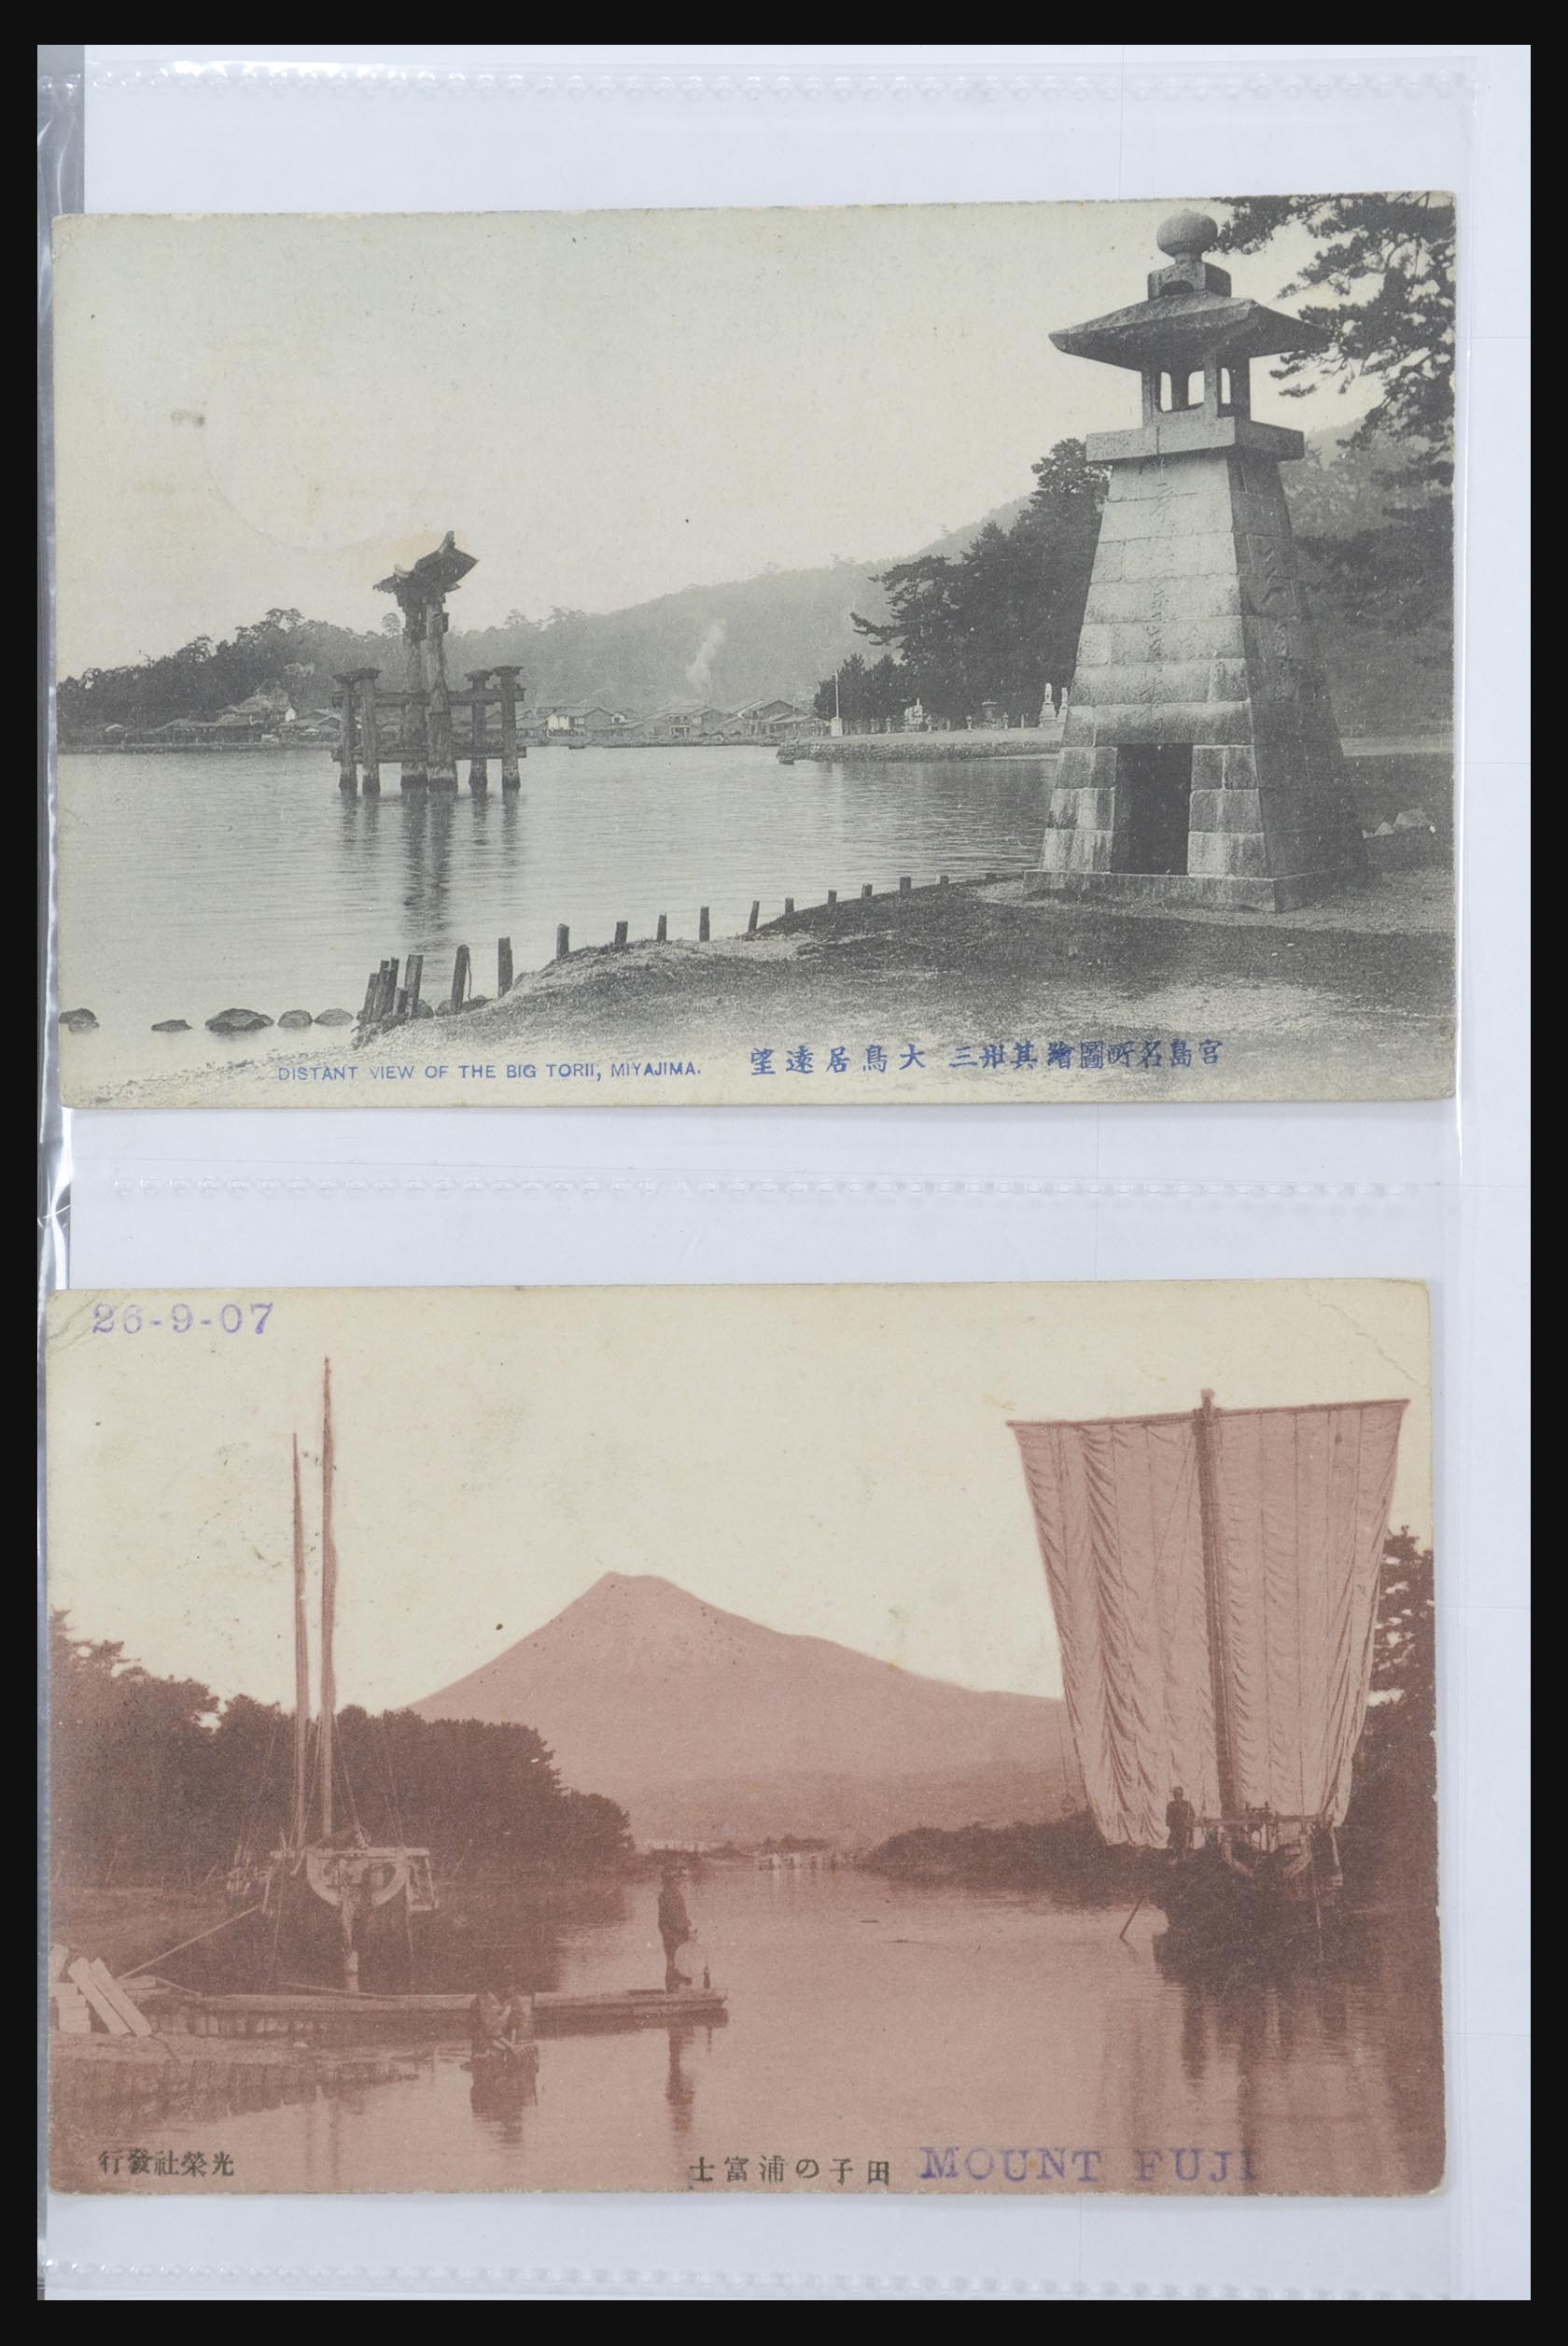 31667 025 - 31667 Japan picture postcards 1900-1920.